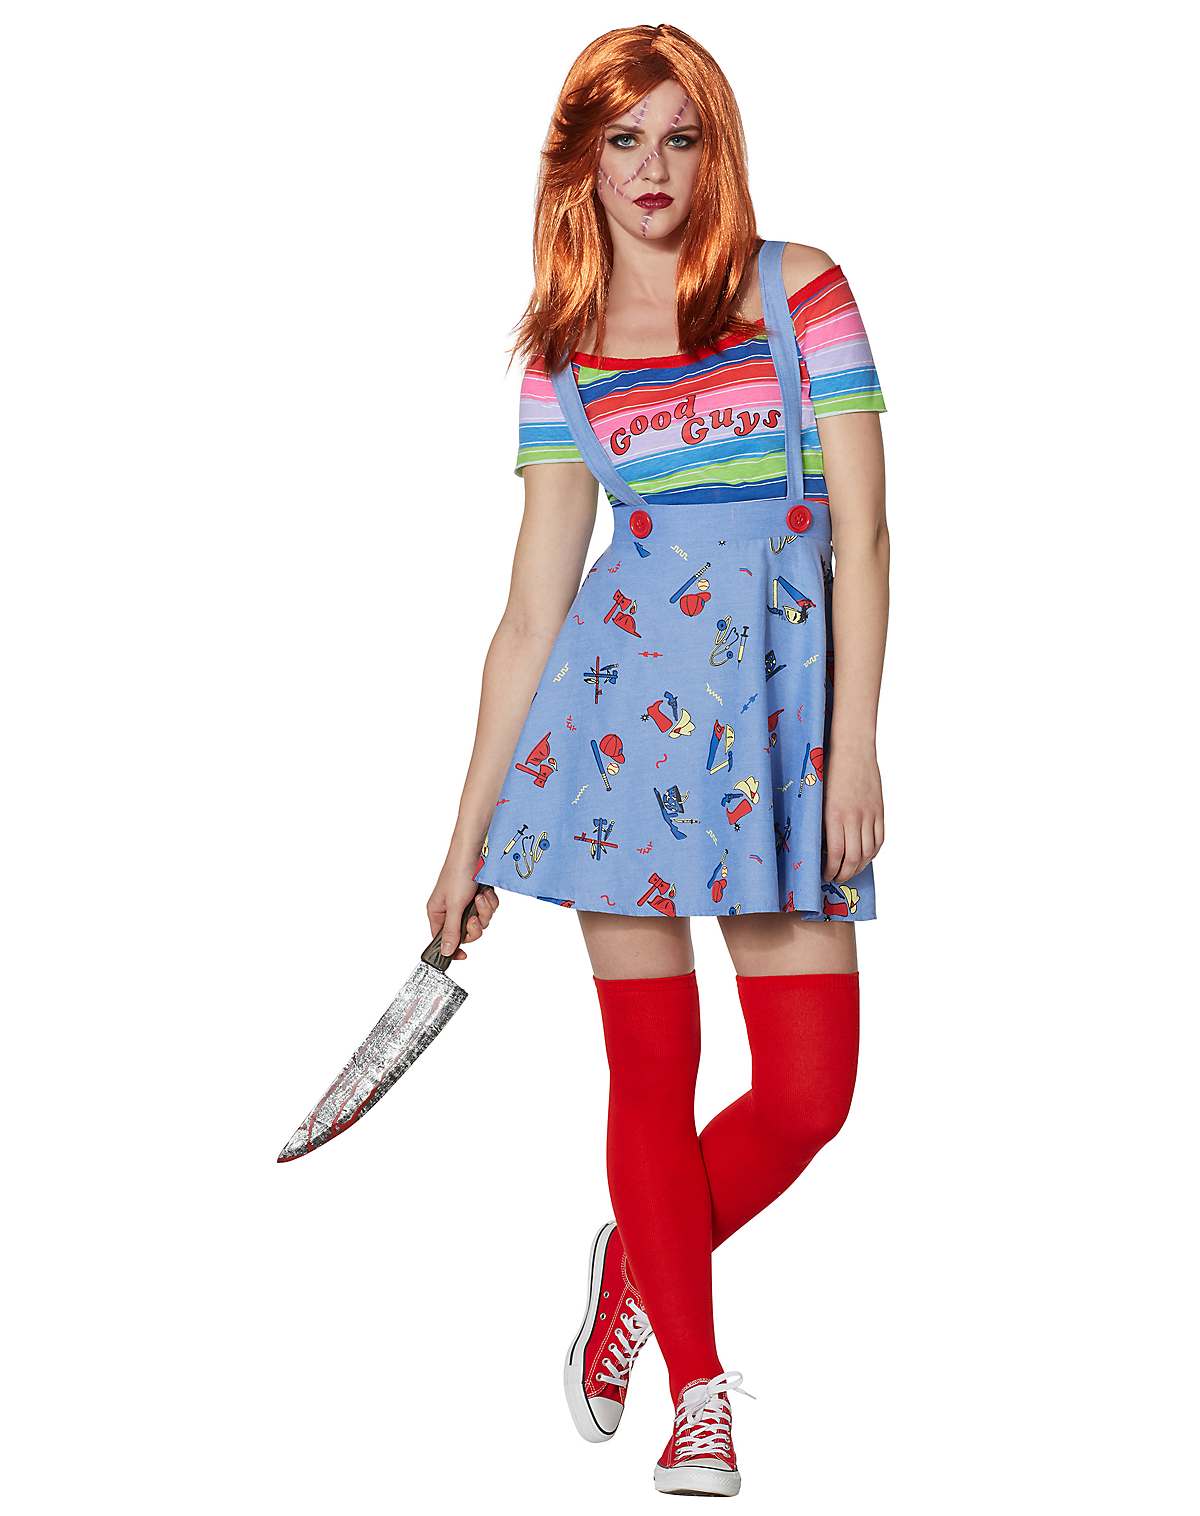 Adult Plus Size Chucky Good Guys Skirt Costume